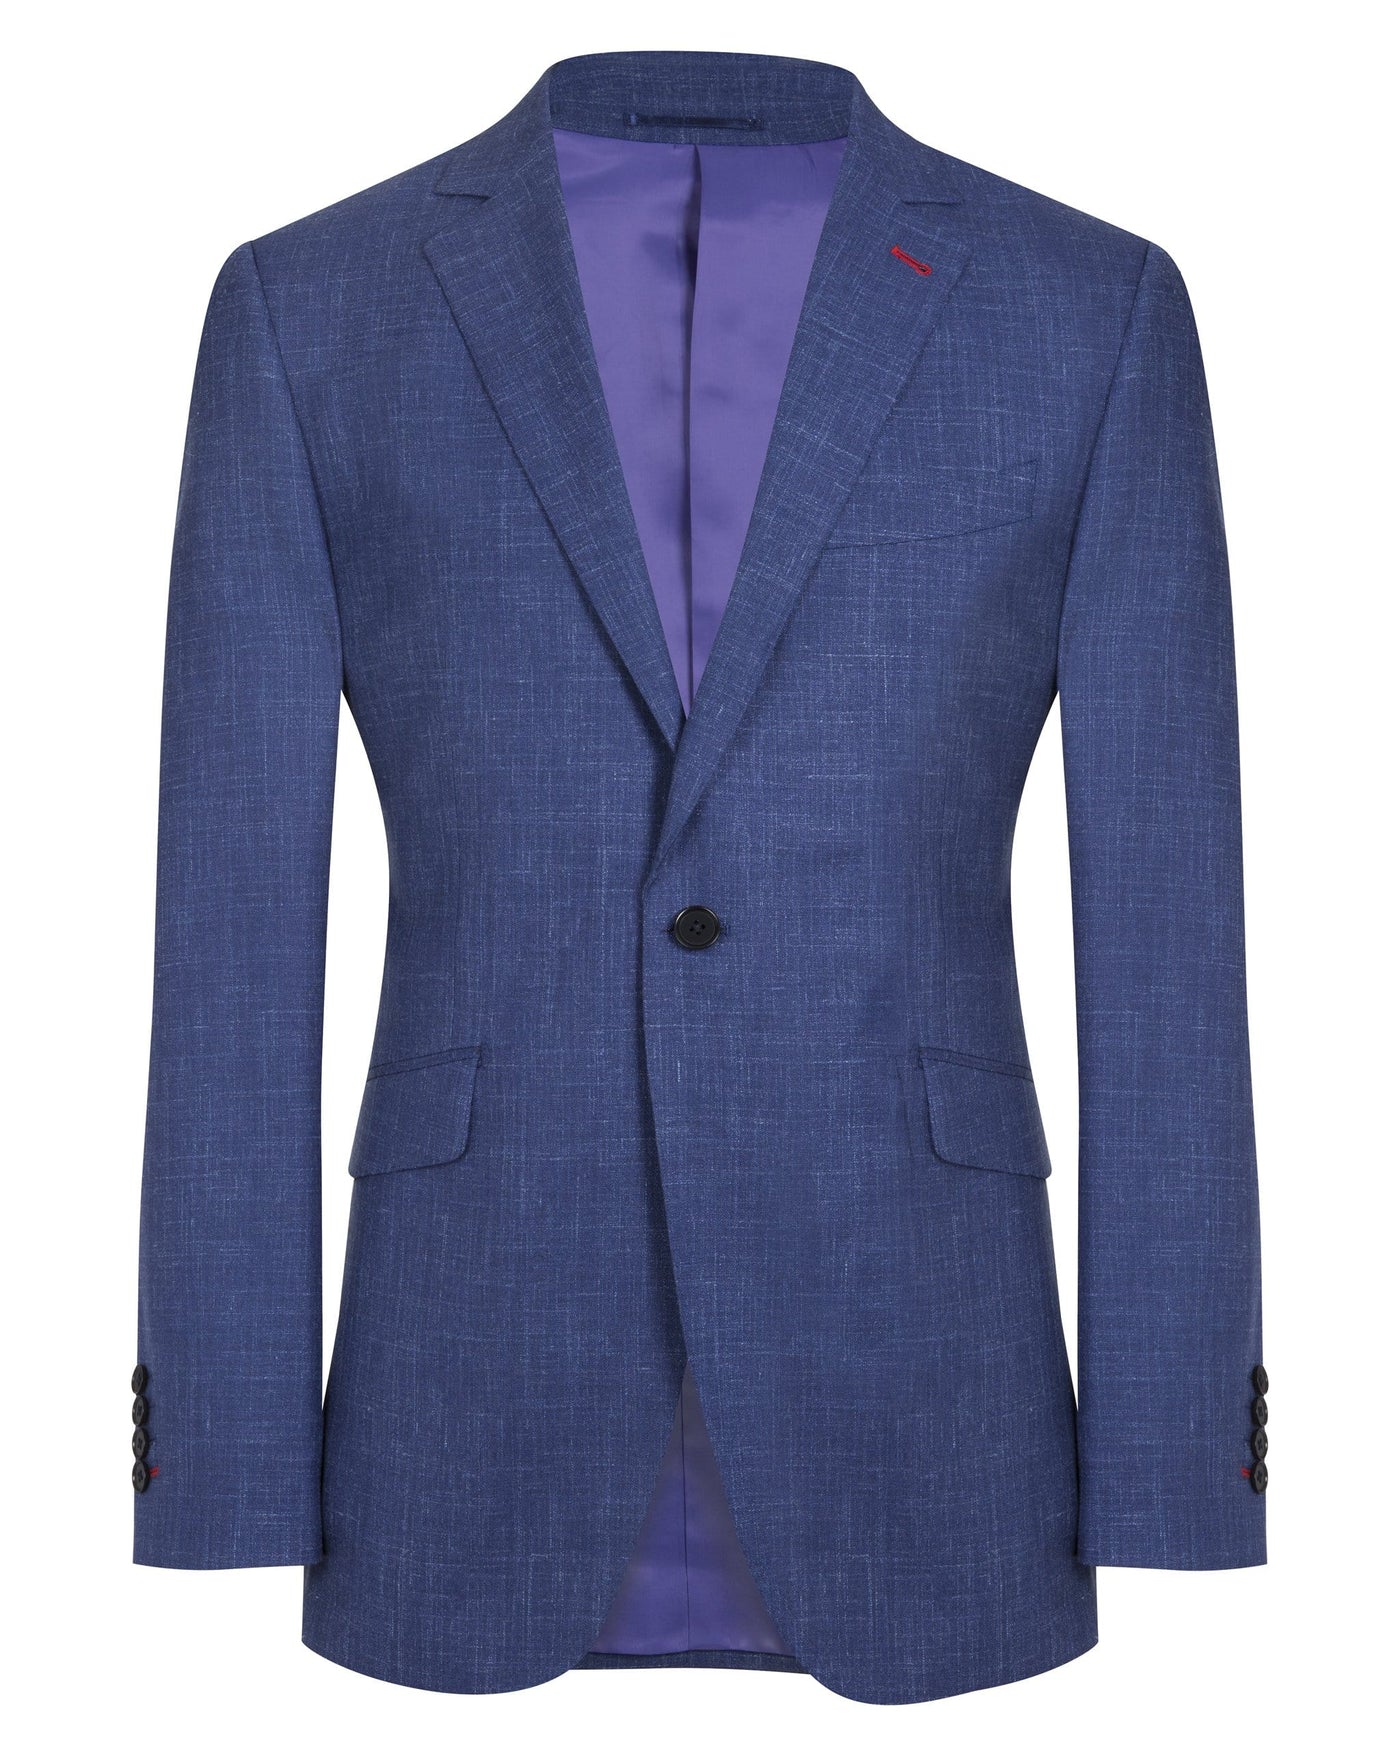 Blue Wool Linen Silk Jacket - Mark marengo